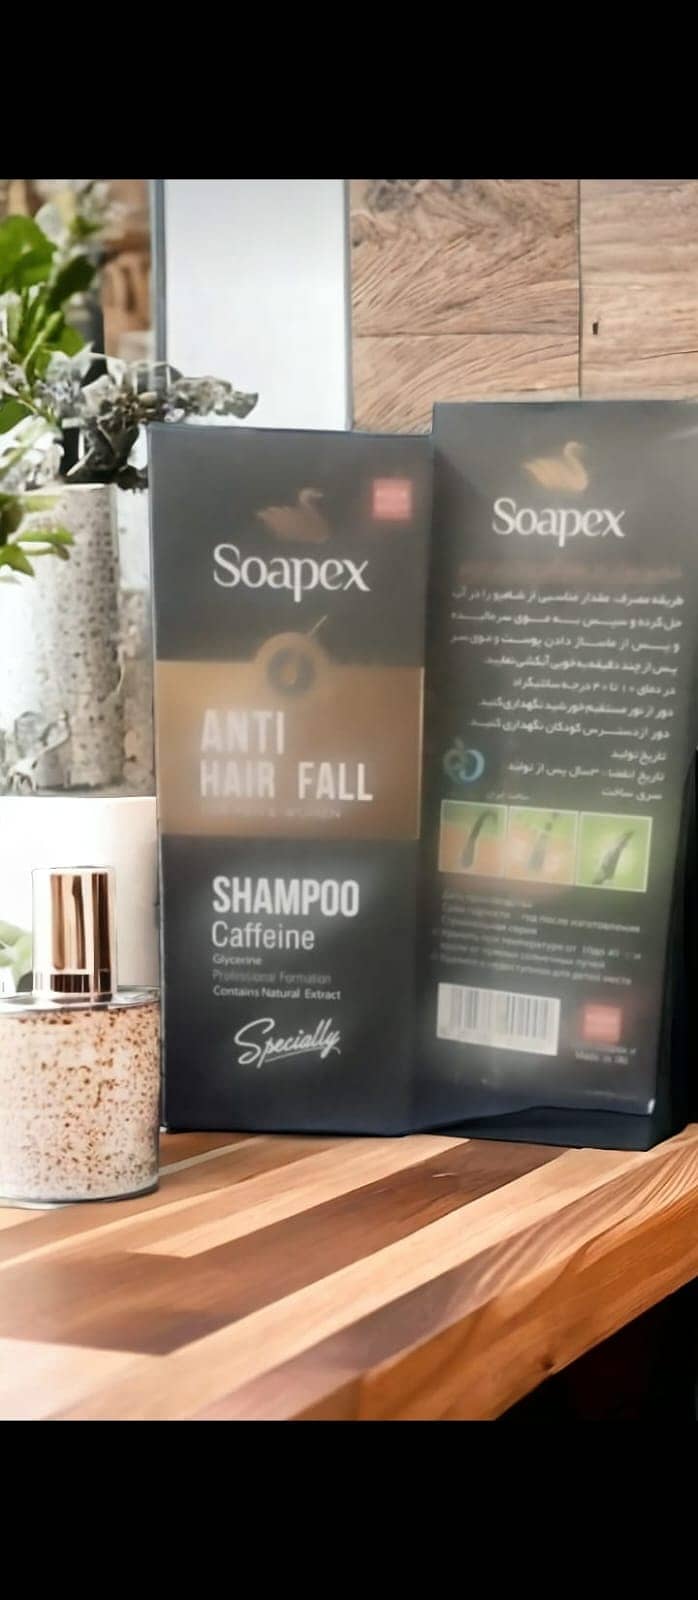 Imported Shampoos Irani650650 0